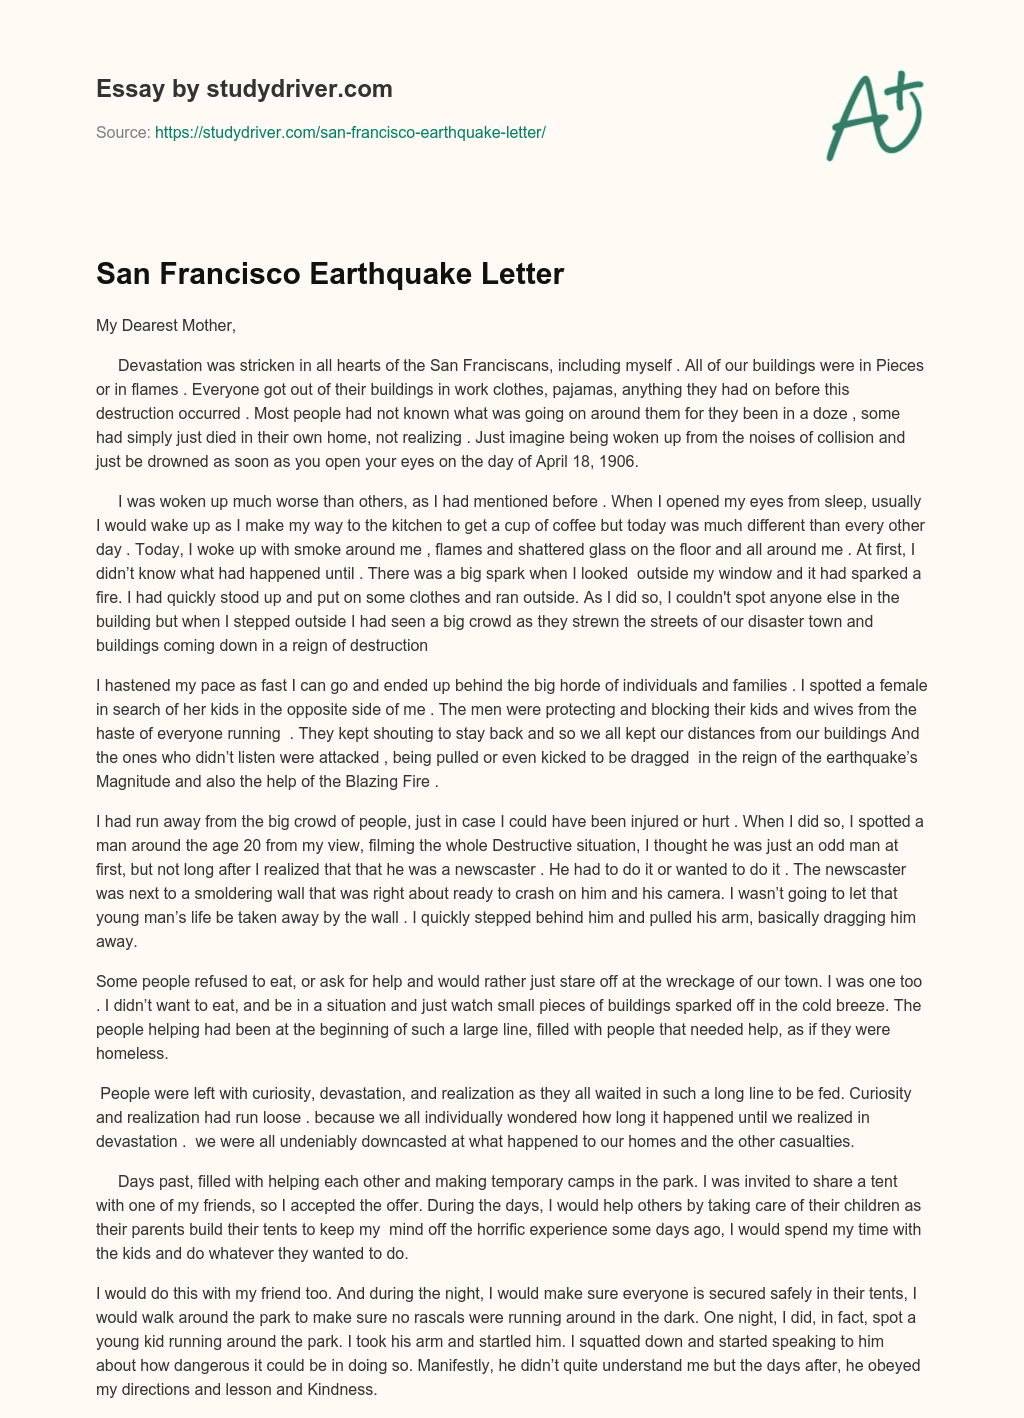 San Francisco Earthquake Letter essay